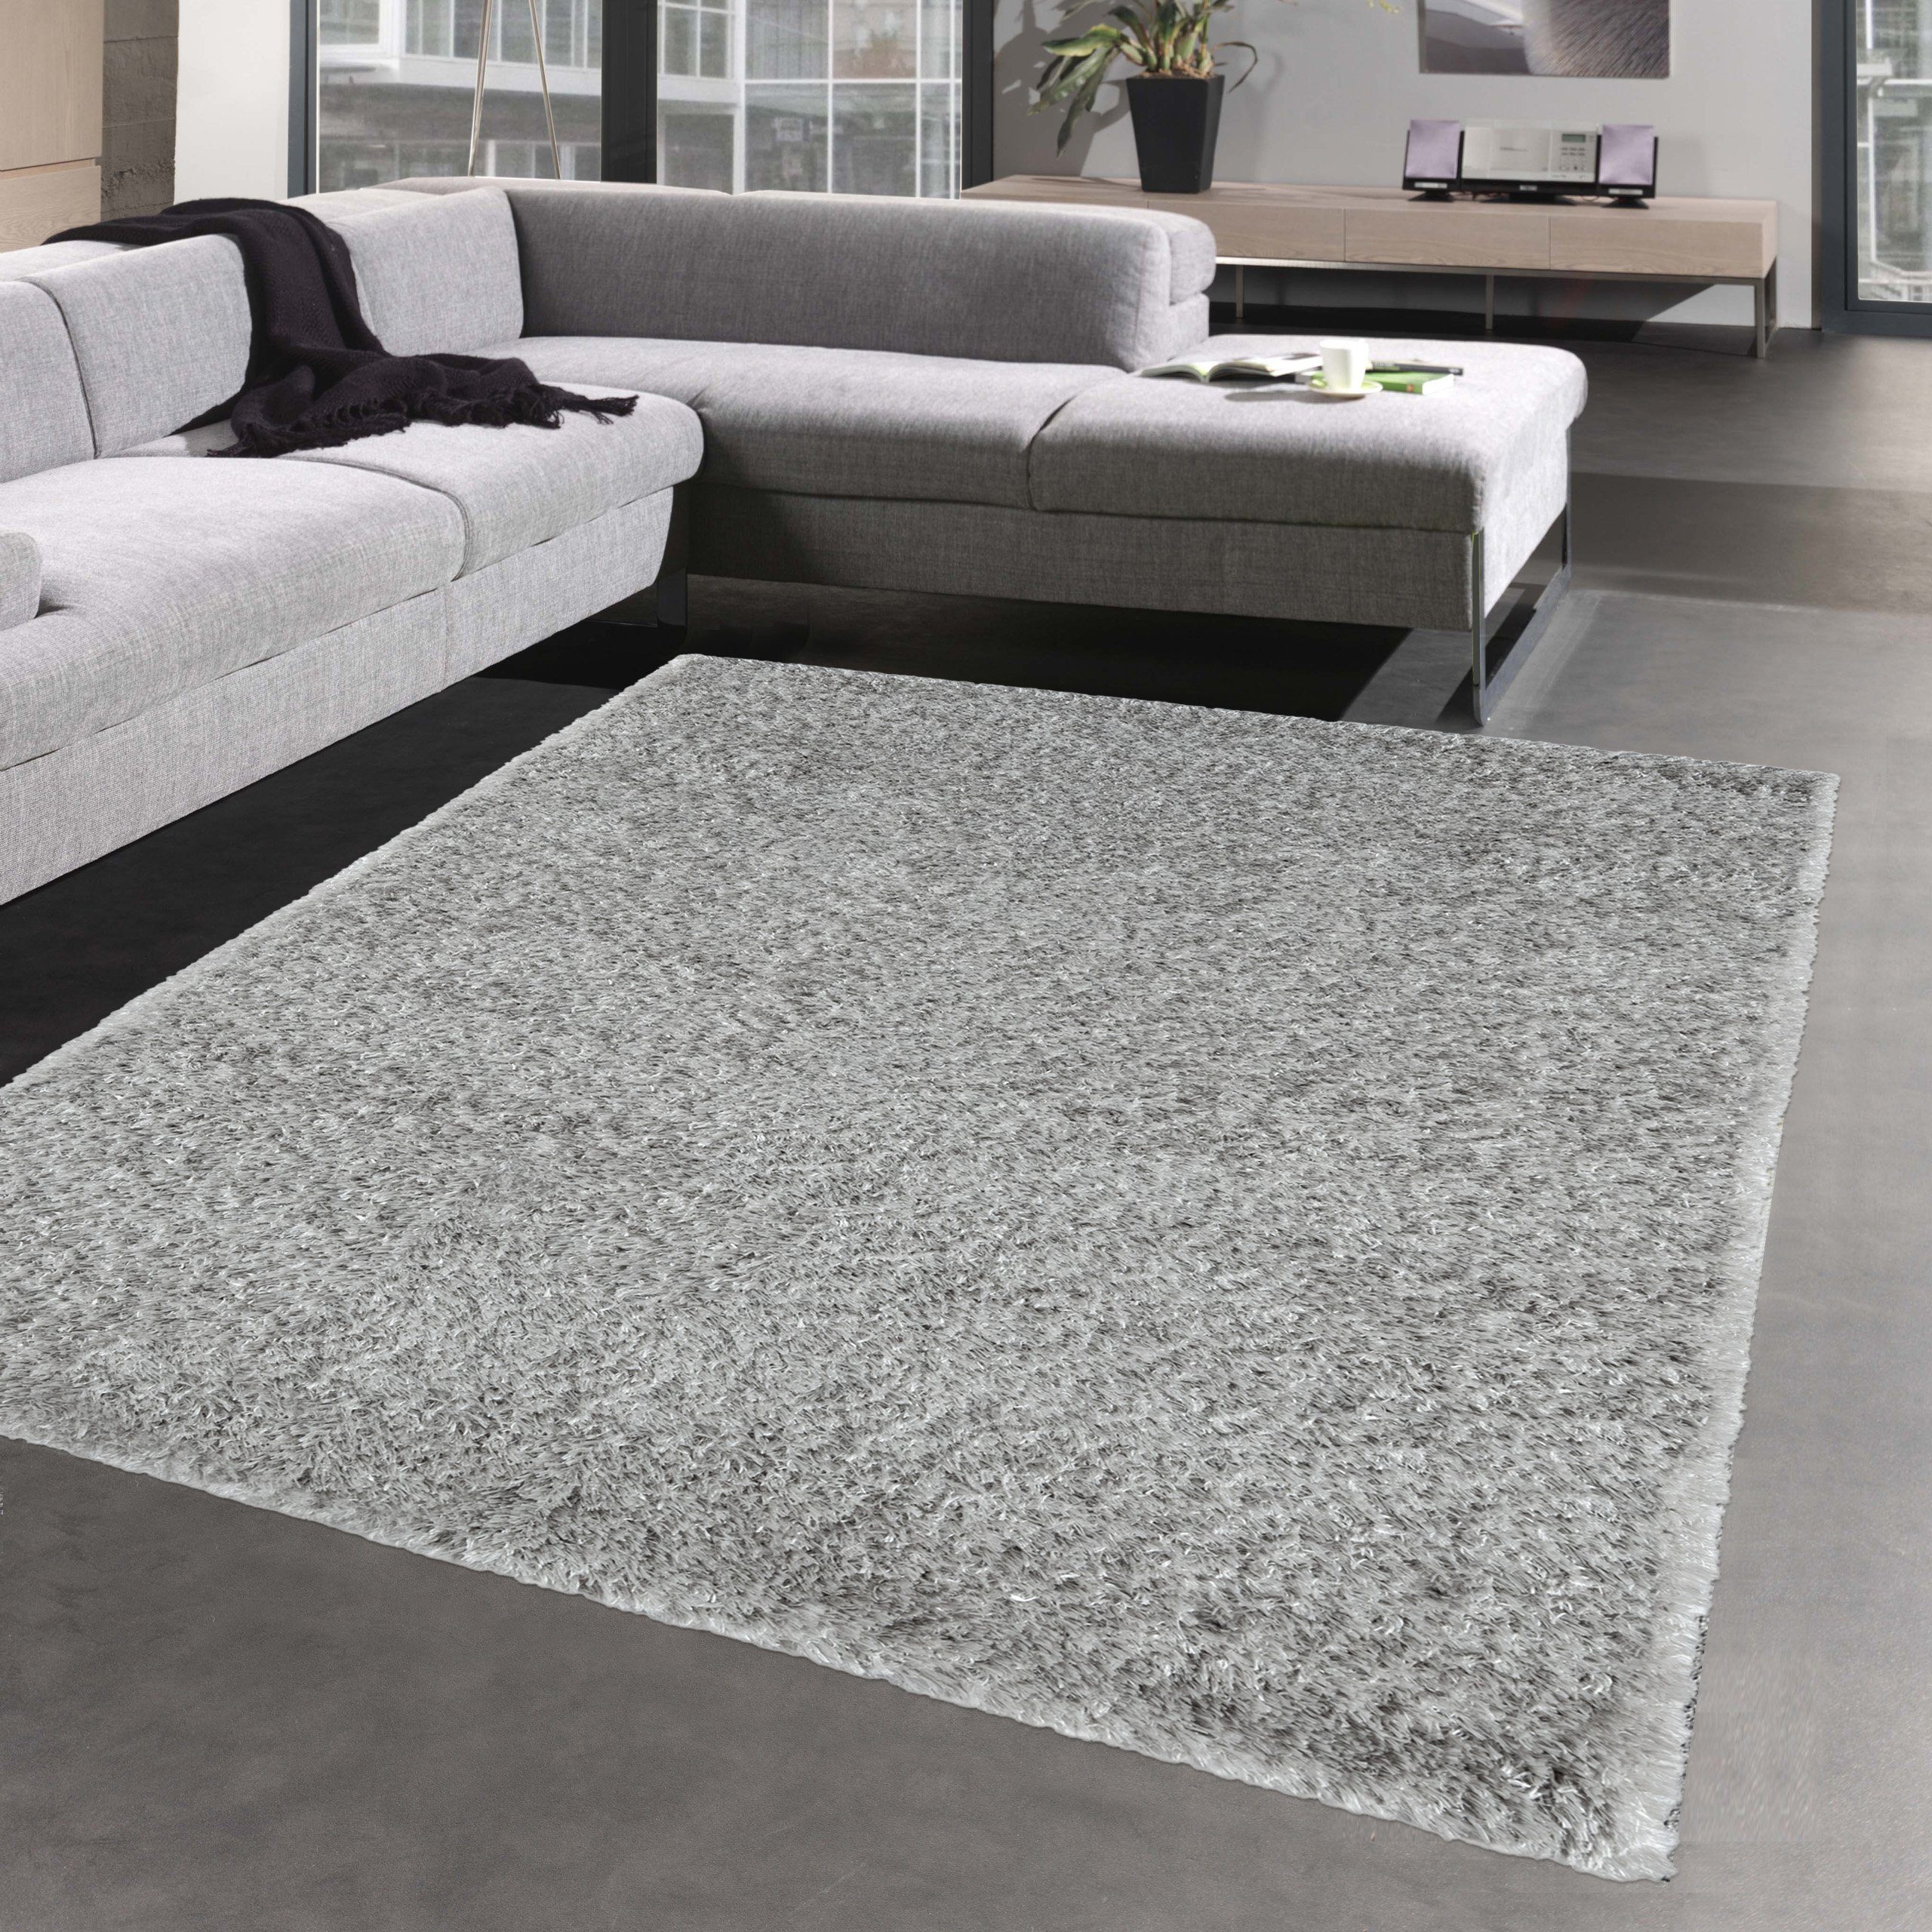 Teppich Wohnzimmerteppich • hell dunkel Effekt • silber-grau, Carpetia, rechteckig, Höhe: 50 mm